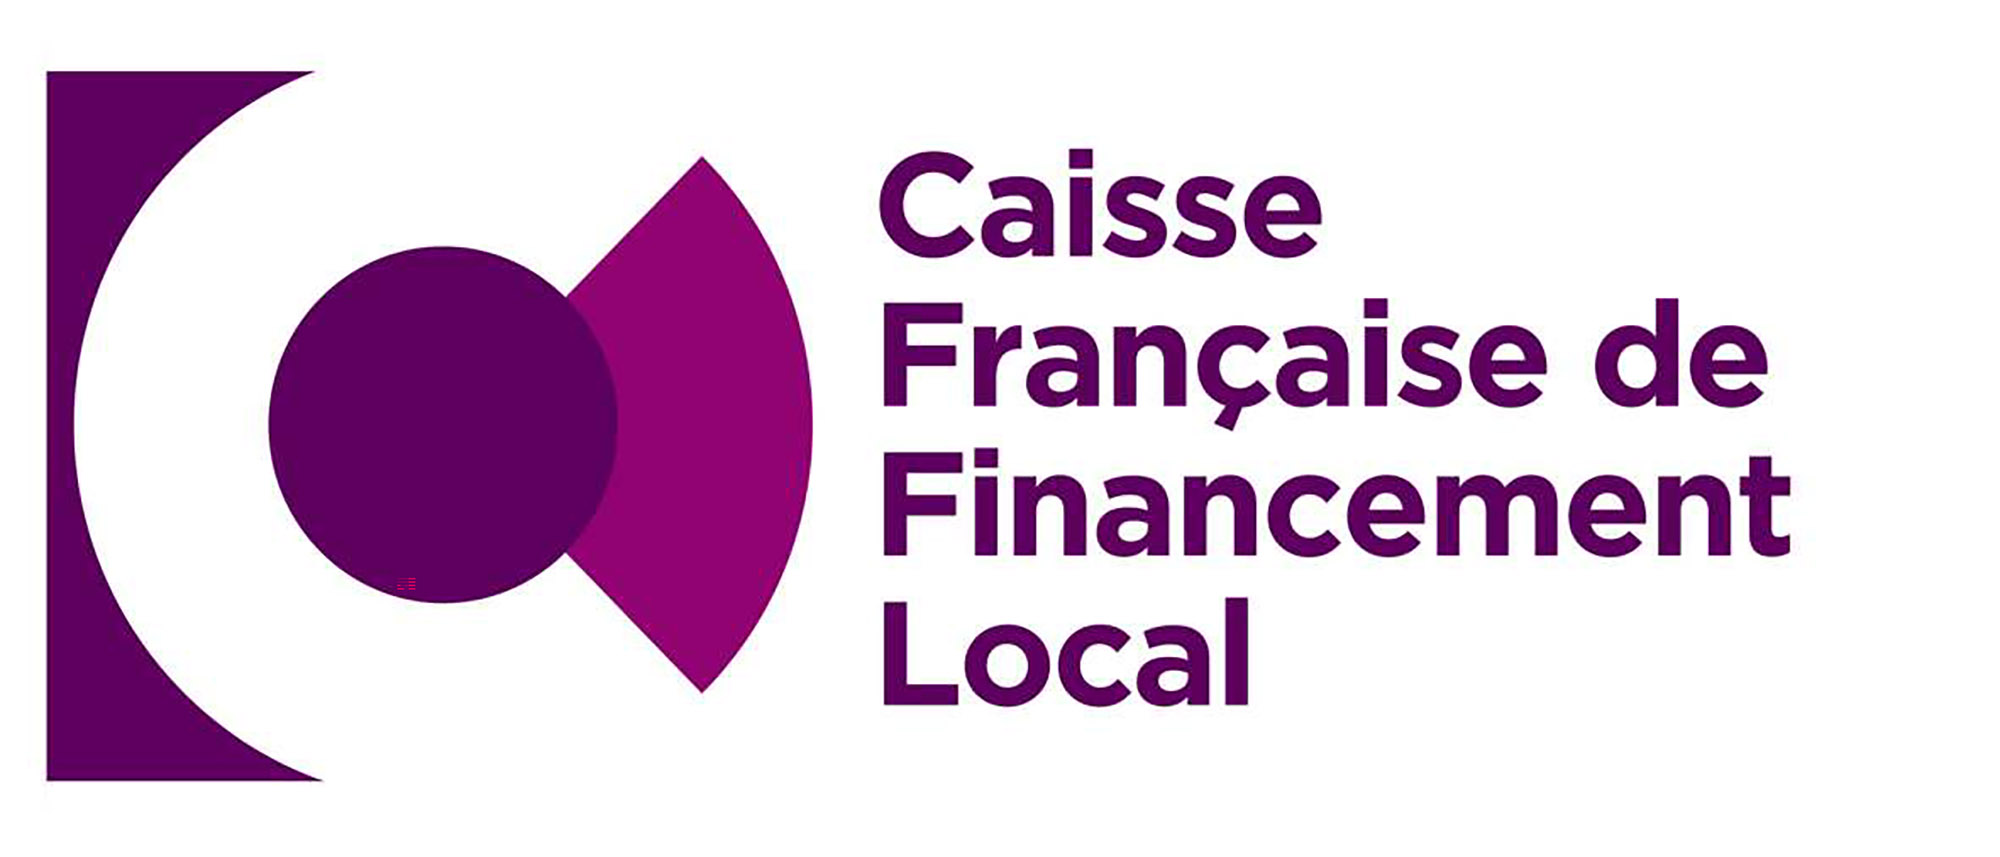 CAFFIL prepares French covered bond for hospital loans - LaingBuisson ...